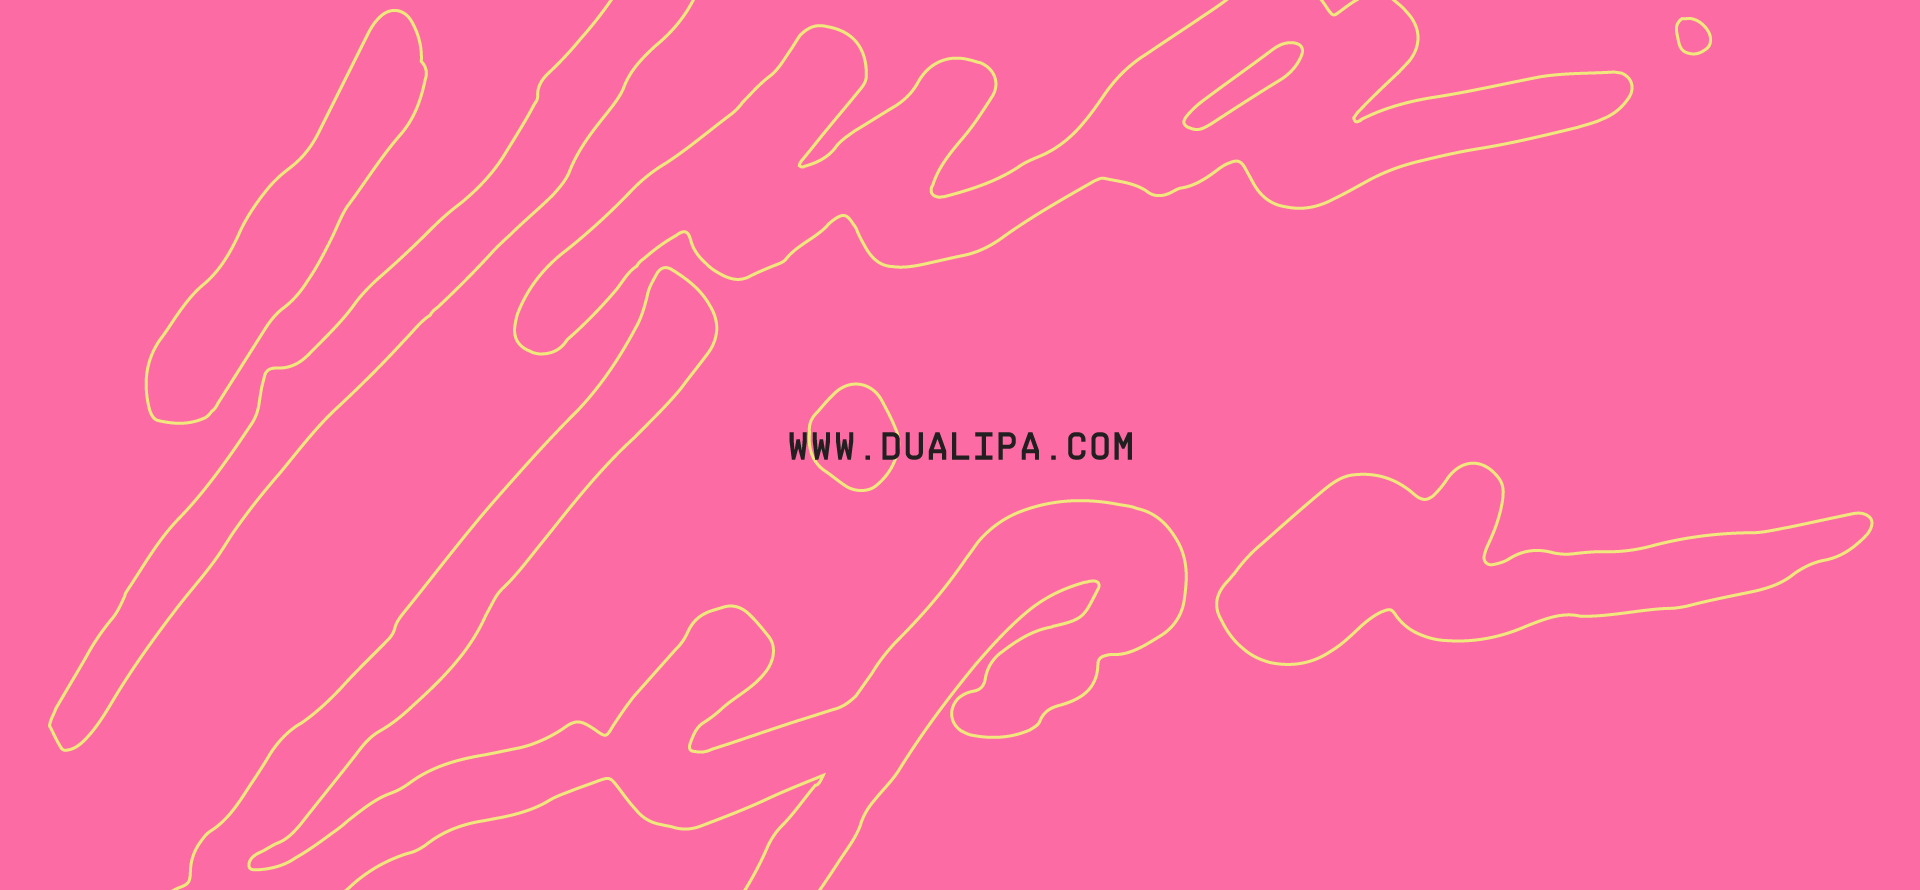 Dualipa.com